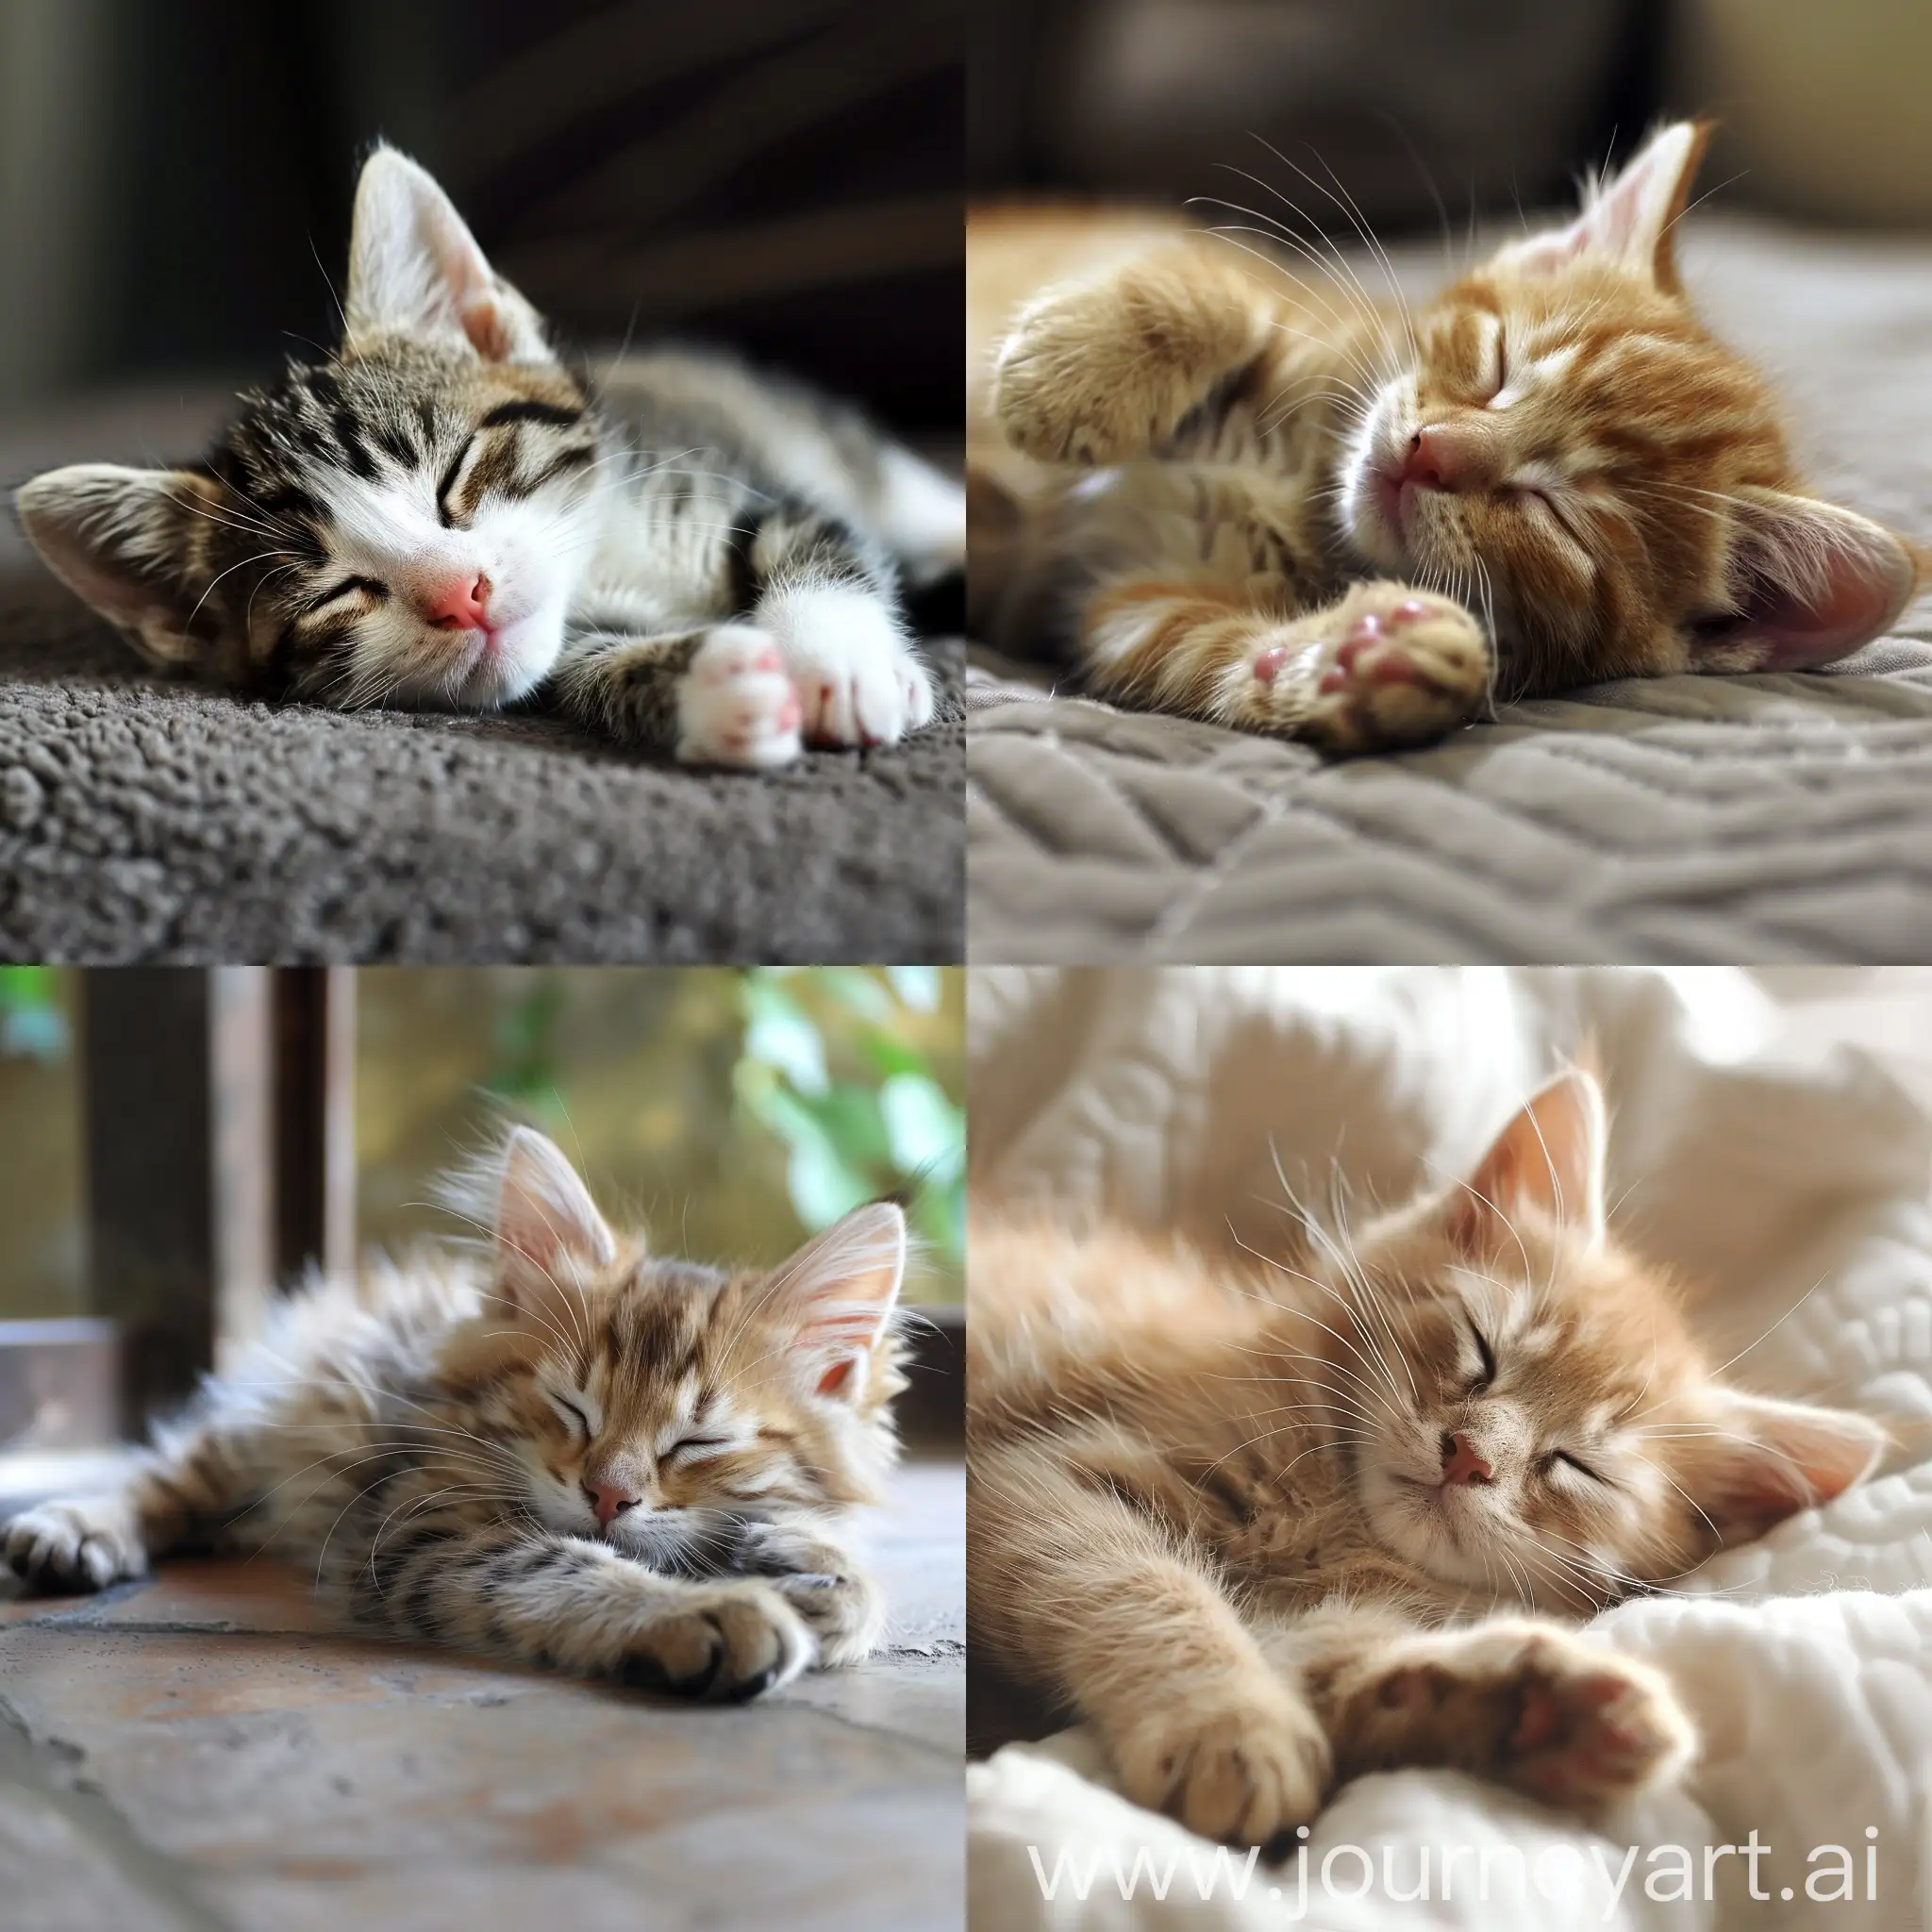 Adorable-Sleeping-Kitten-in-a-Peaceful-Nap